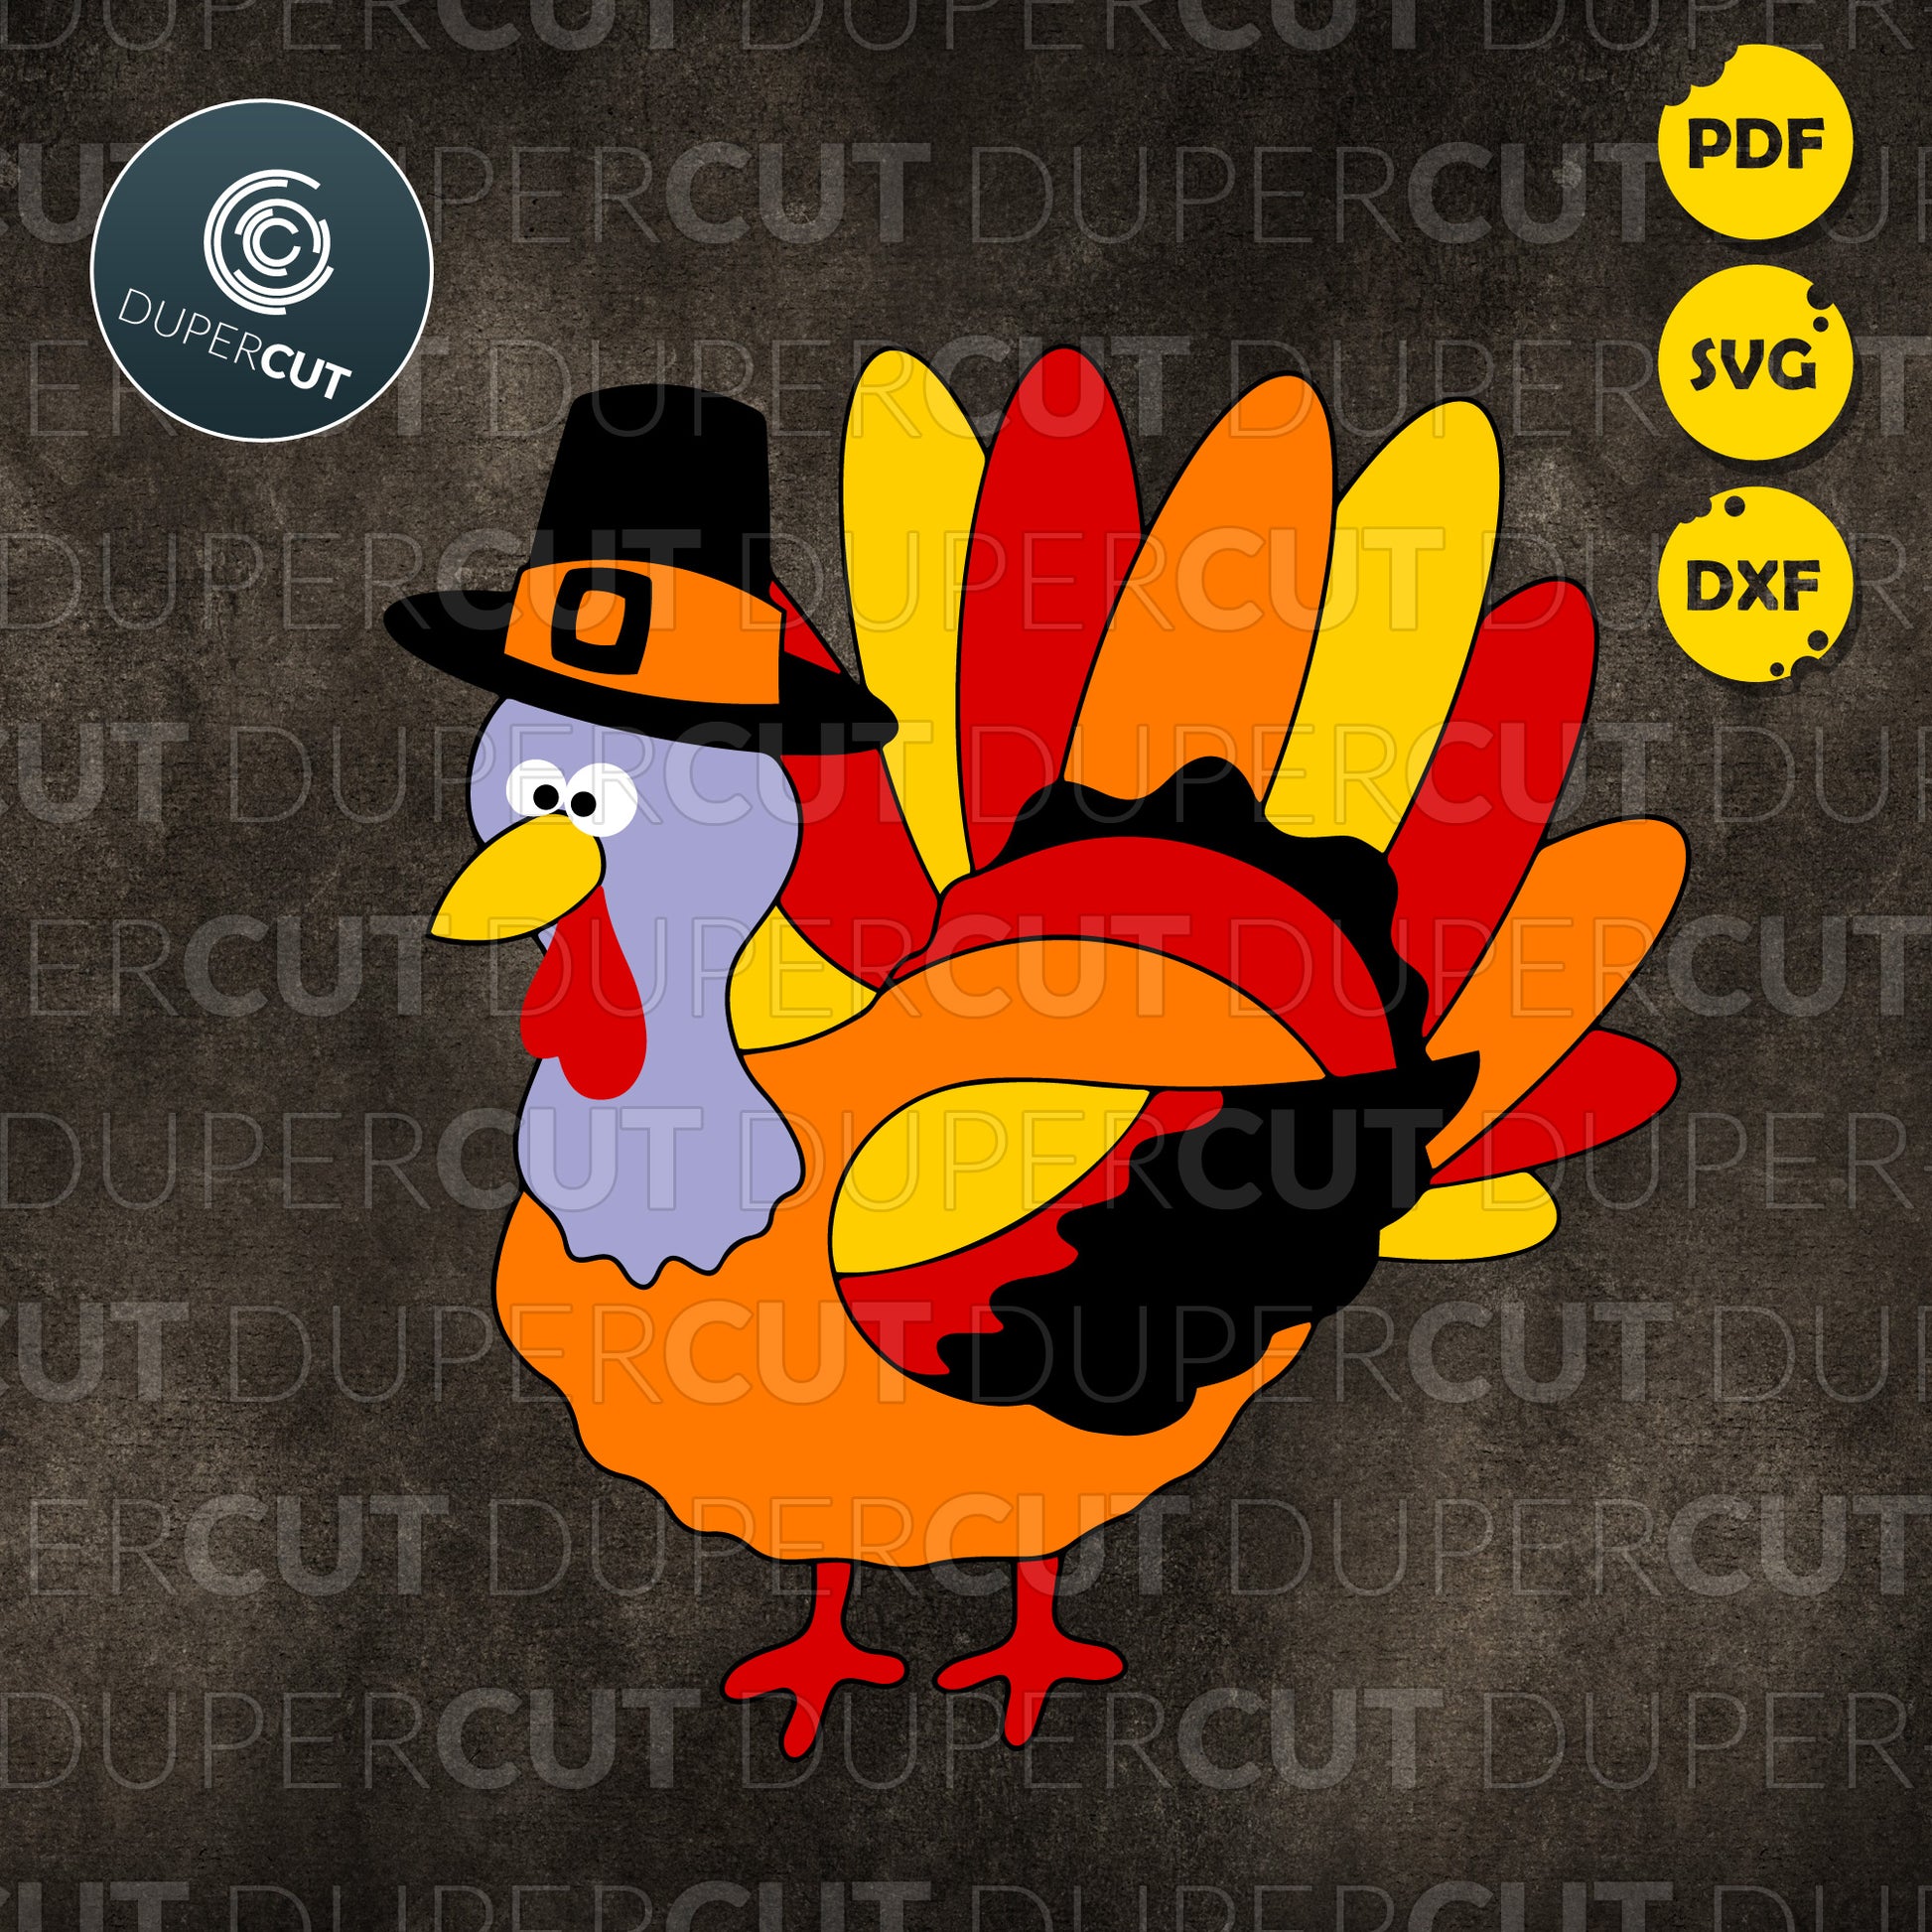 Happy Thanksgiving 2023 SVG Thanksgiving Sign SVG Turkey -  Finland